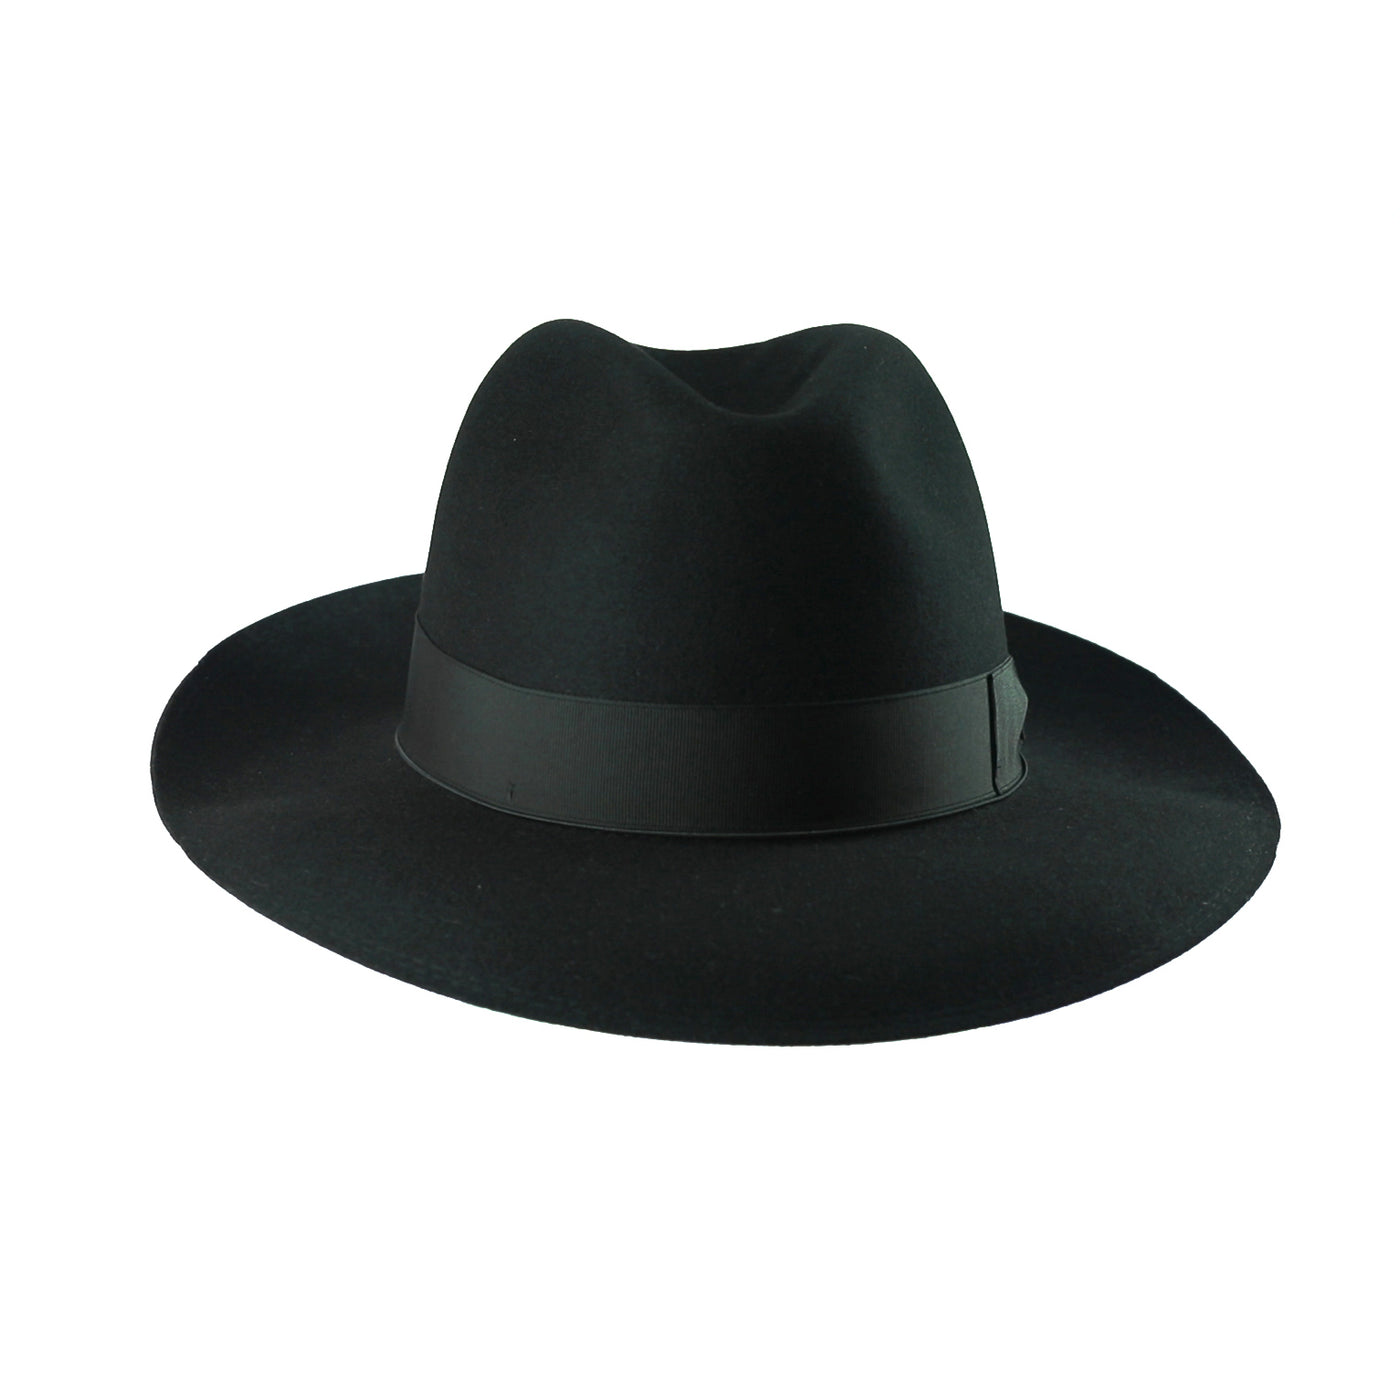 Classico 234, product_type] - Borsalino for Atica fedora hat